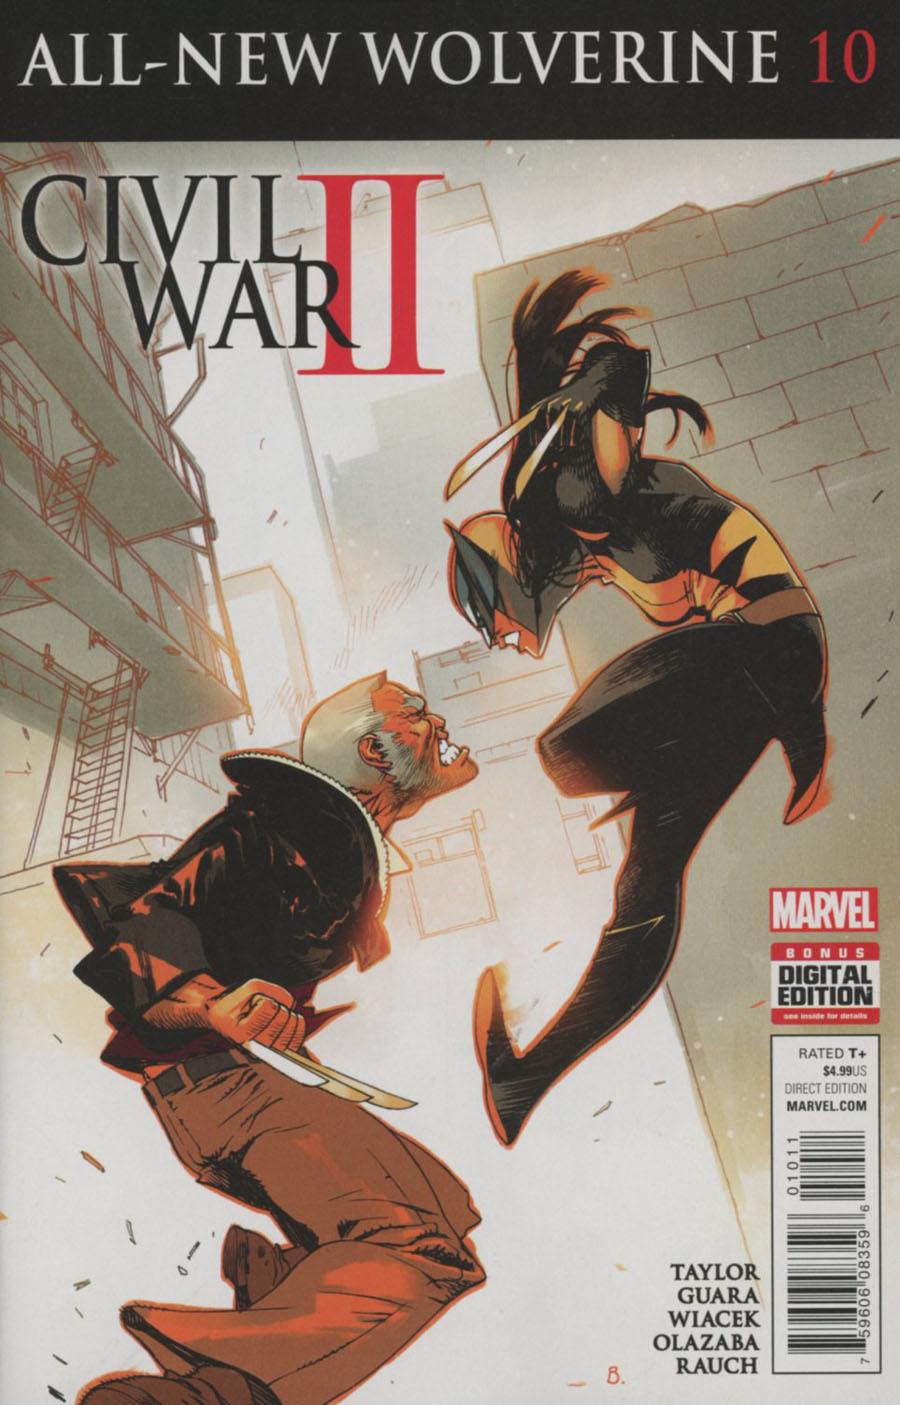 All-New Wolverine #10 (Civil War II Tie-In)